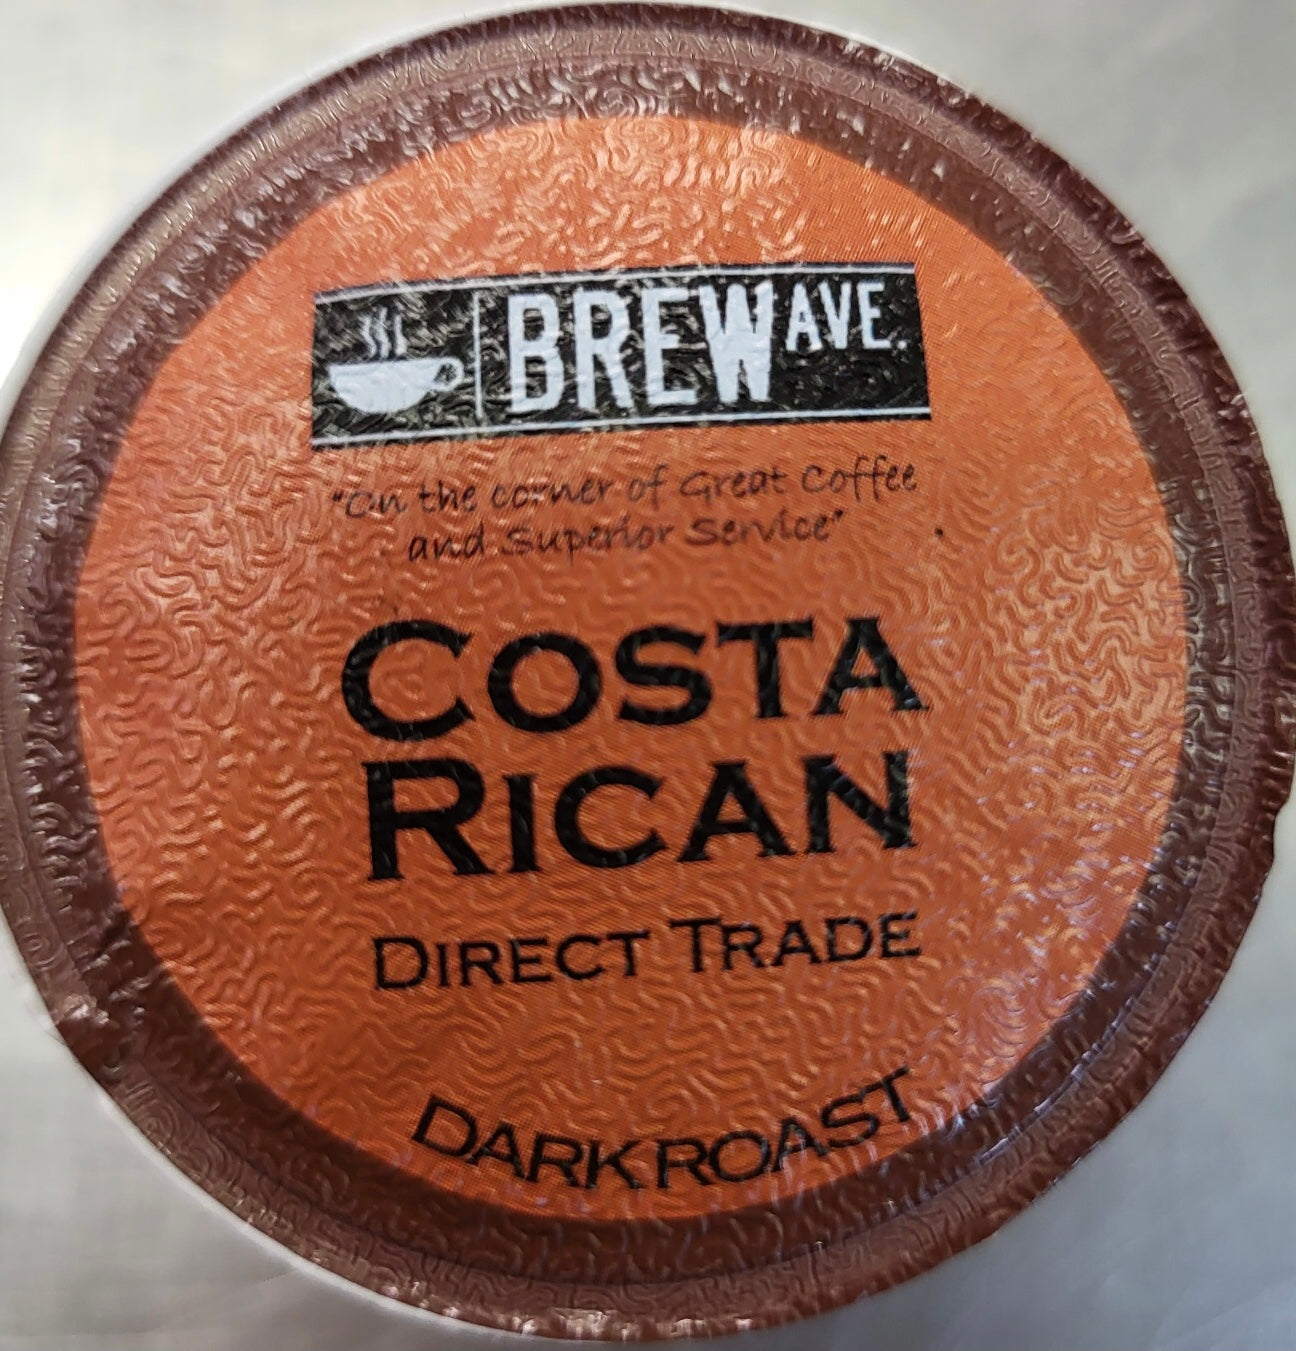 COSTA RICAN DARK ROAST K CUP